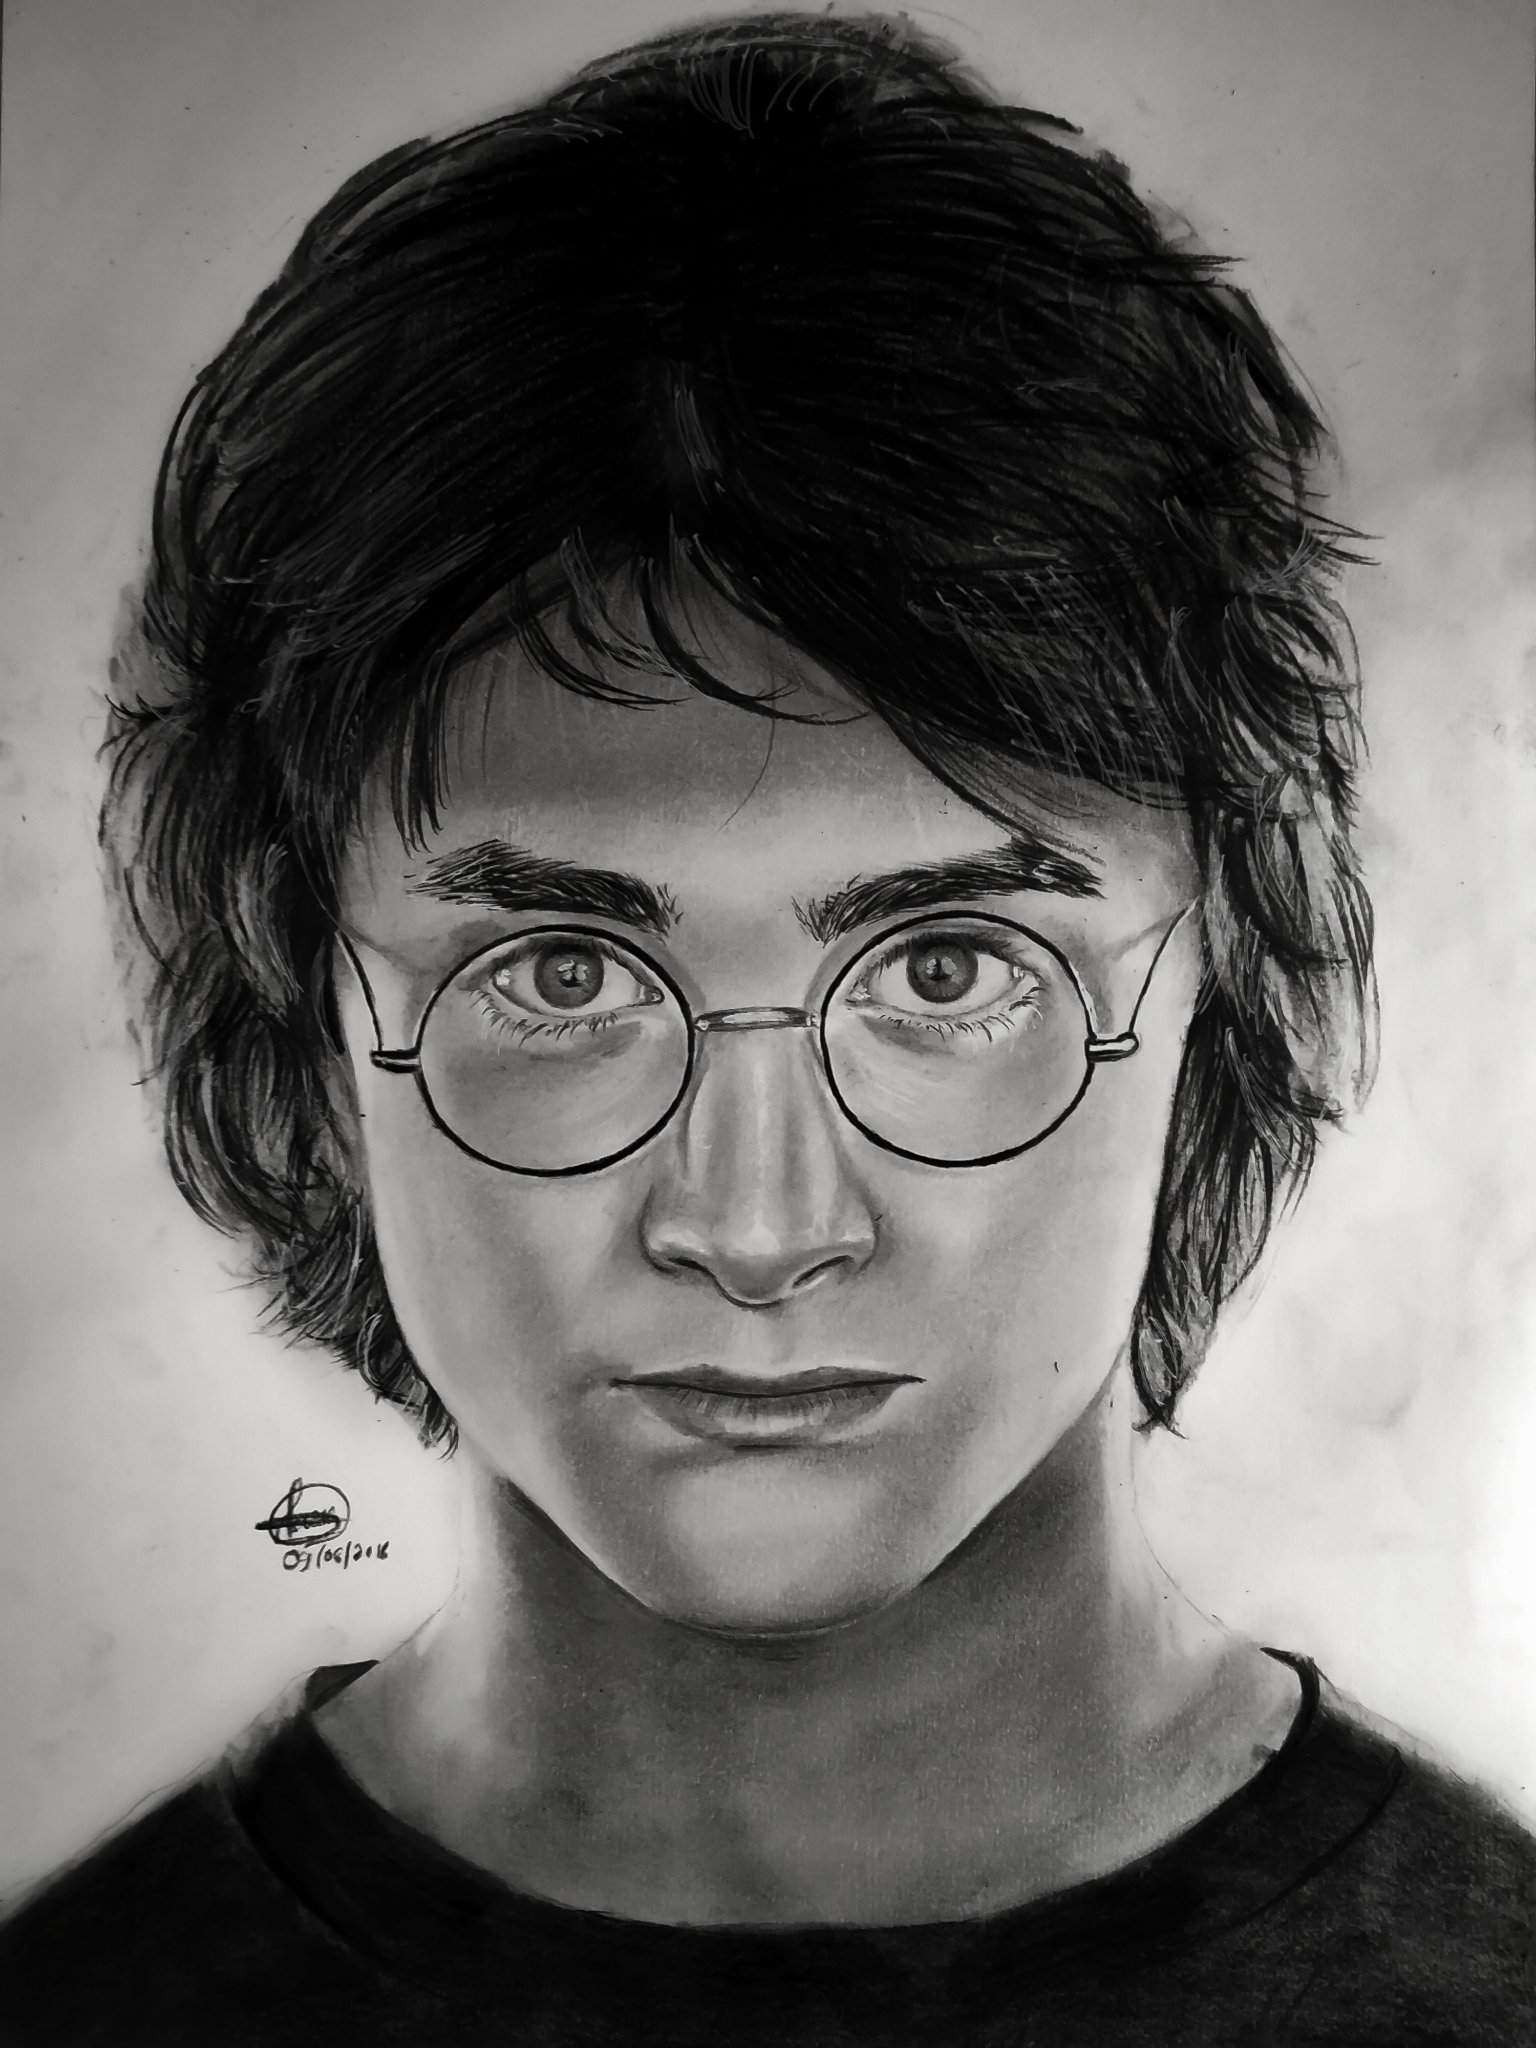 Pencil Sketch Of Harry Potter